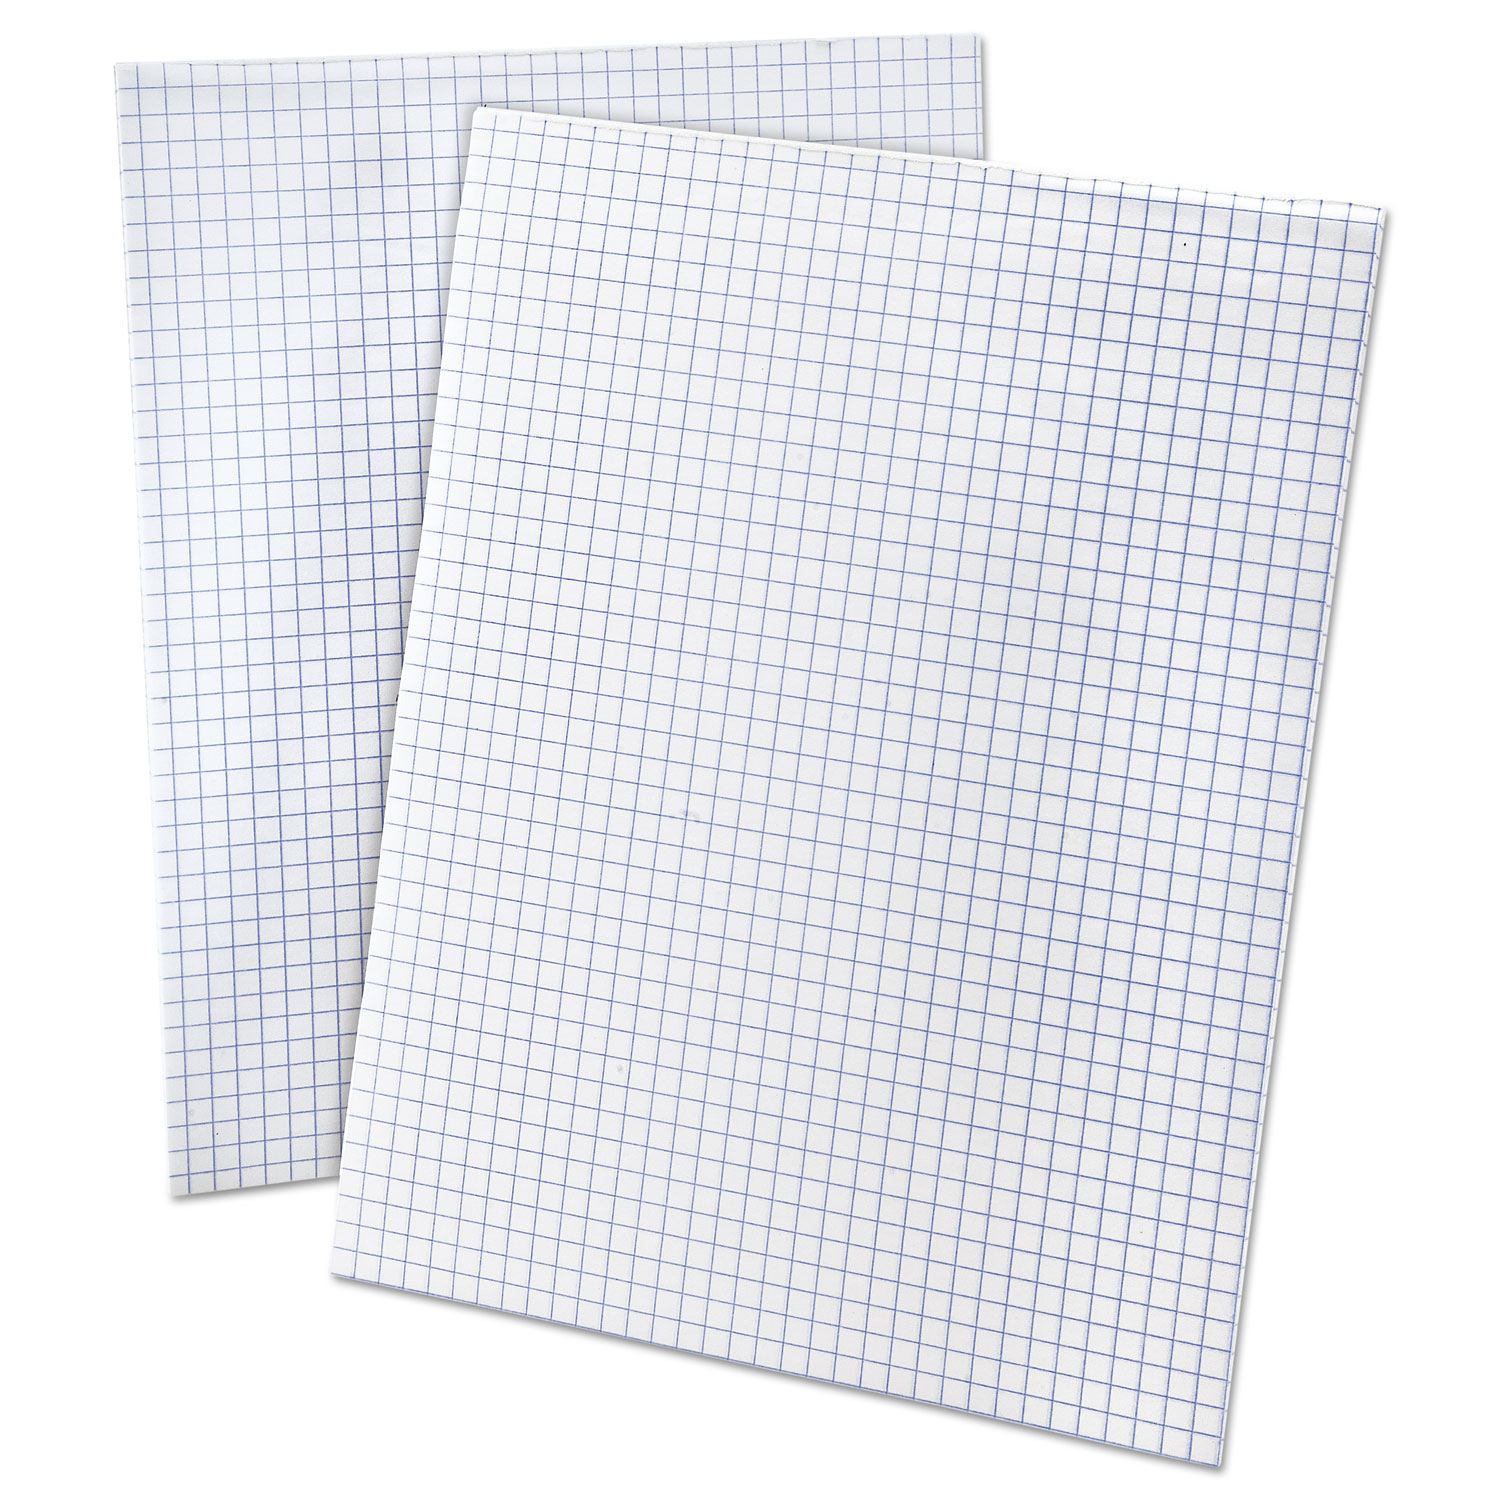  Ampad 22-030C Quadrille Pads, 4 sq/in Quadrille Rule, 8.5 x 11, White, 50 Sheets (TOP22030C) 